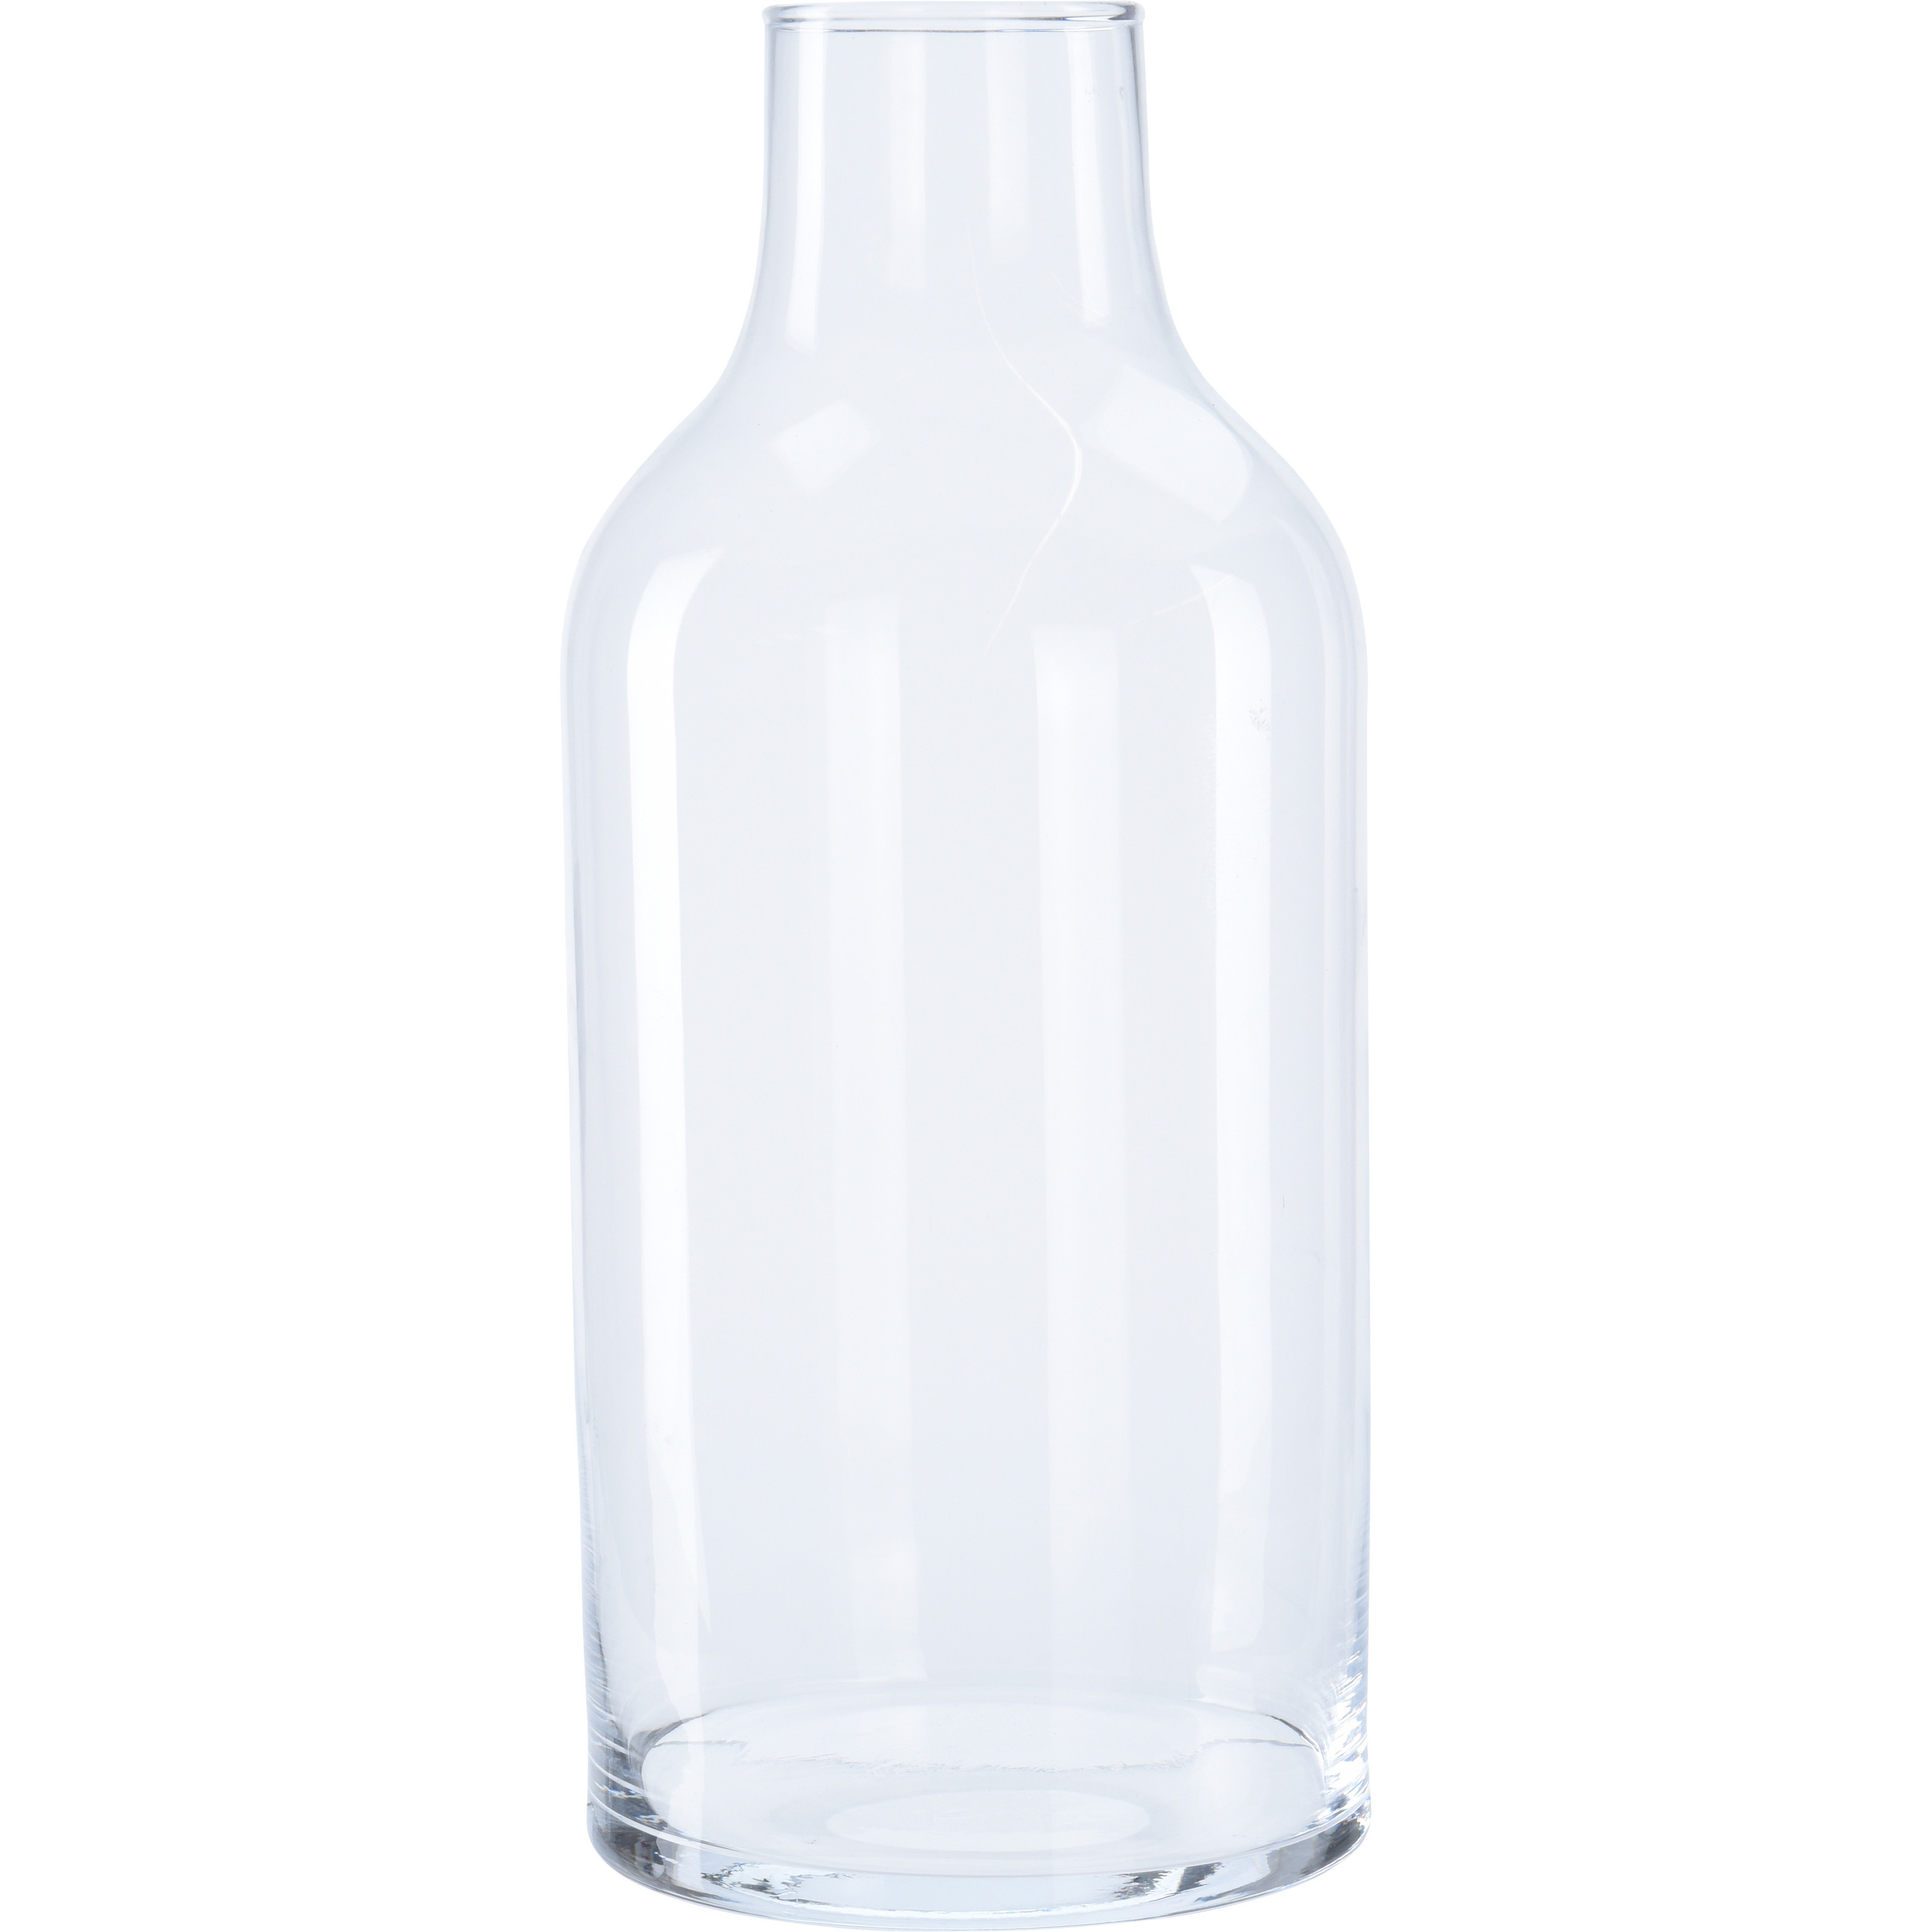 1x Glazen fles vaas/vazen 15,5 x 35 cm transparant 4900 ml